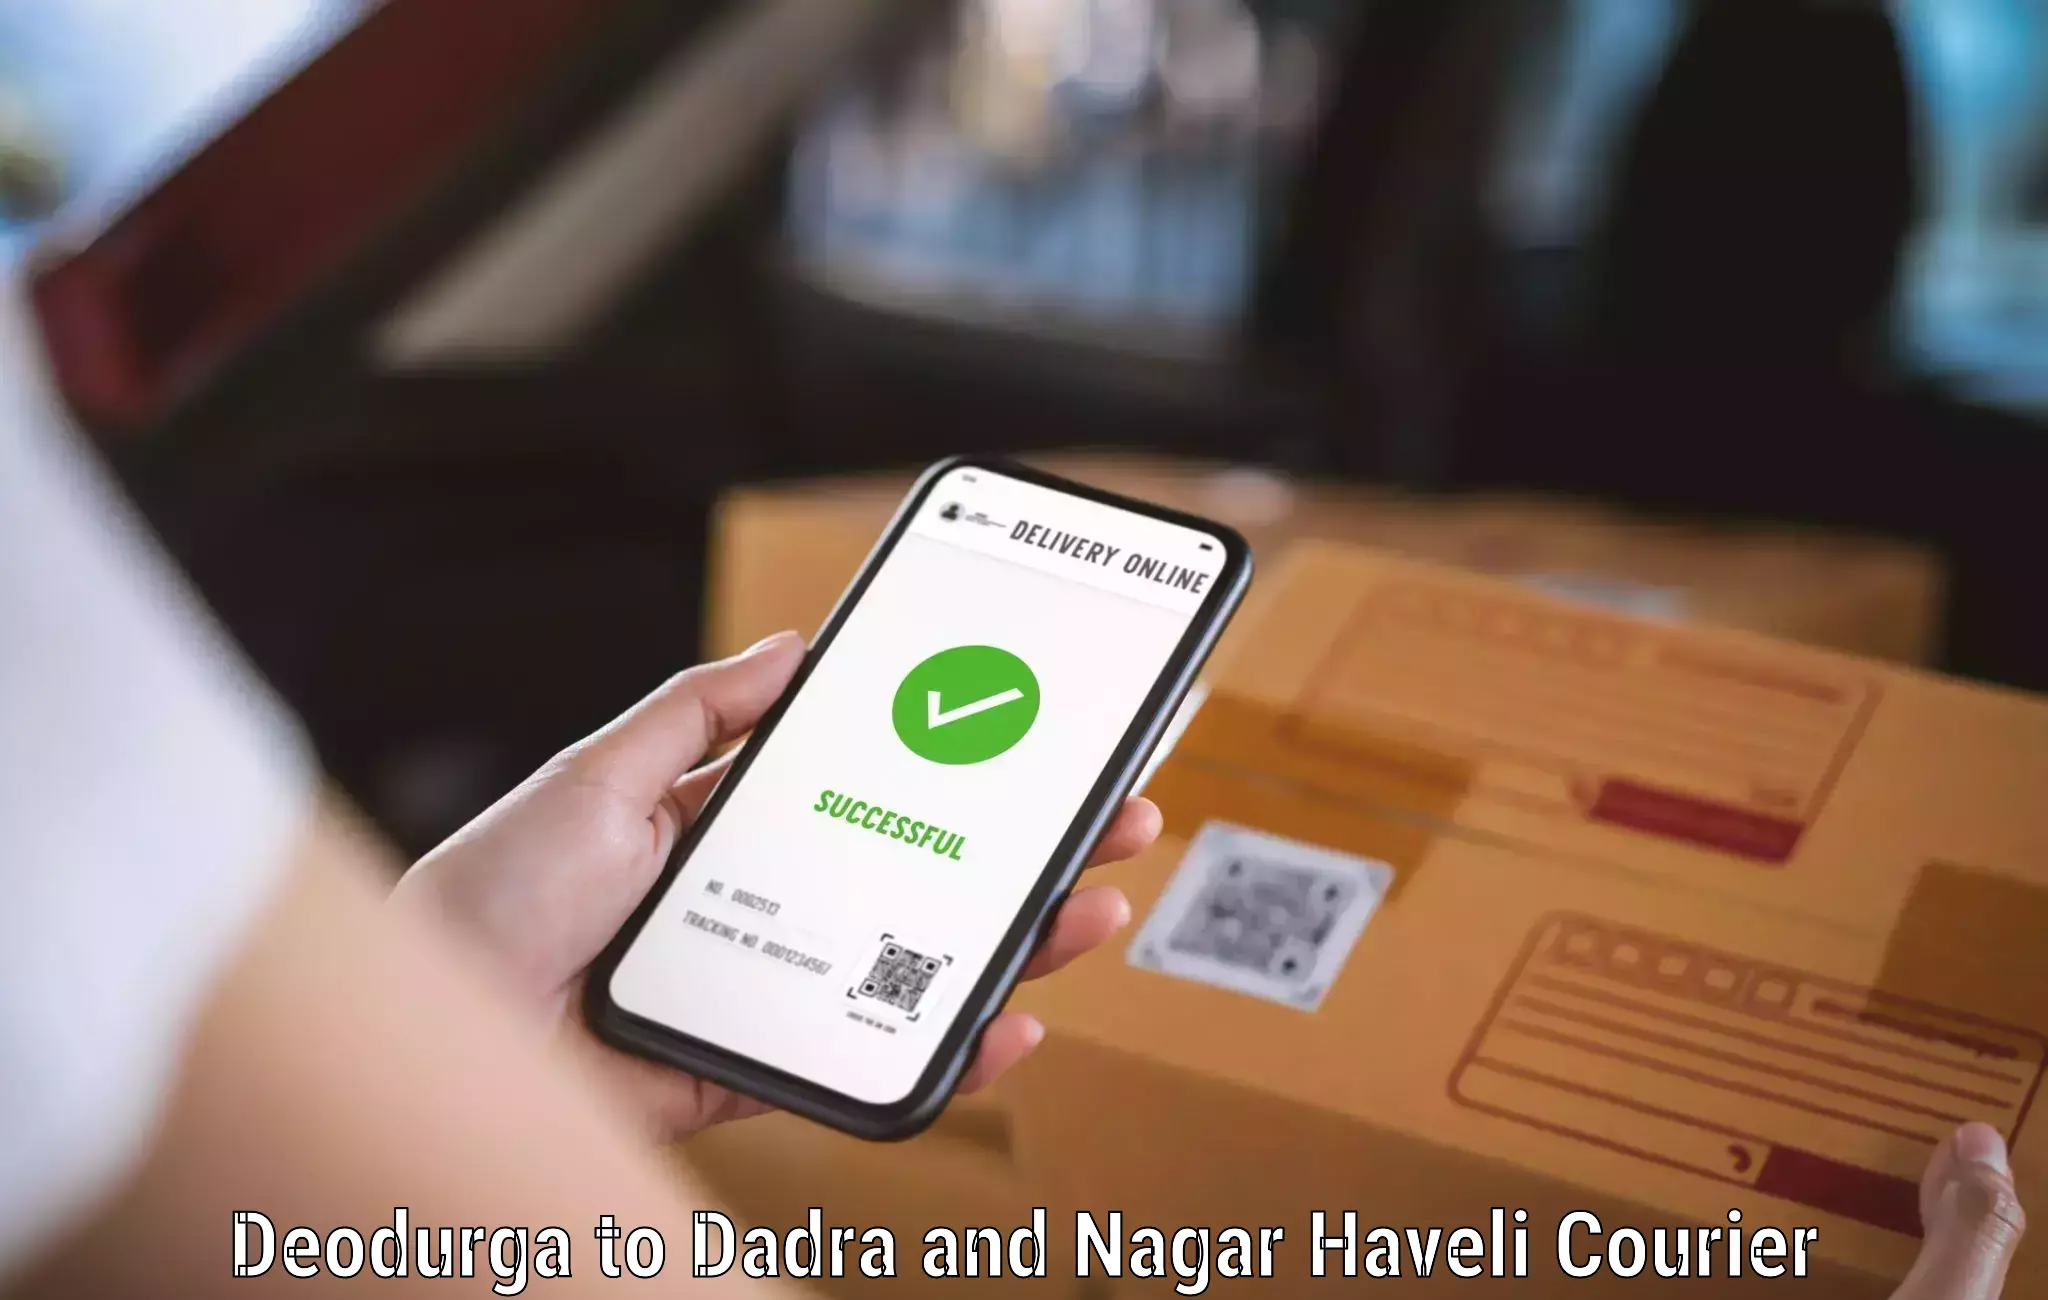 Courier service comparison Deodurga to Dadra and Nagar Haveli